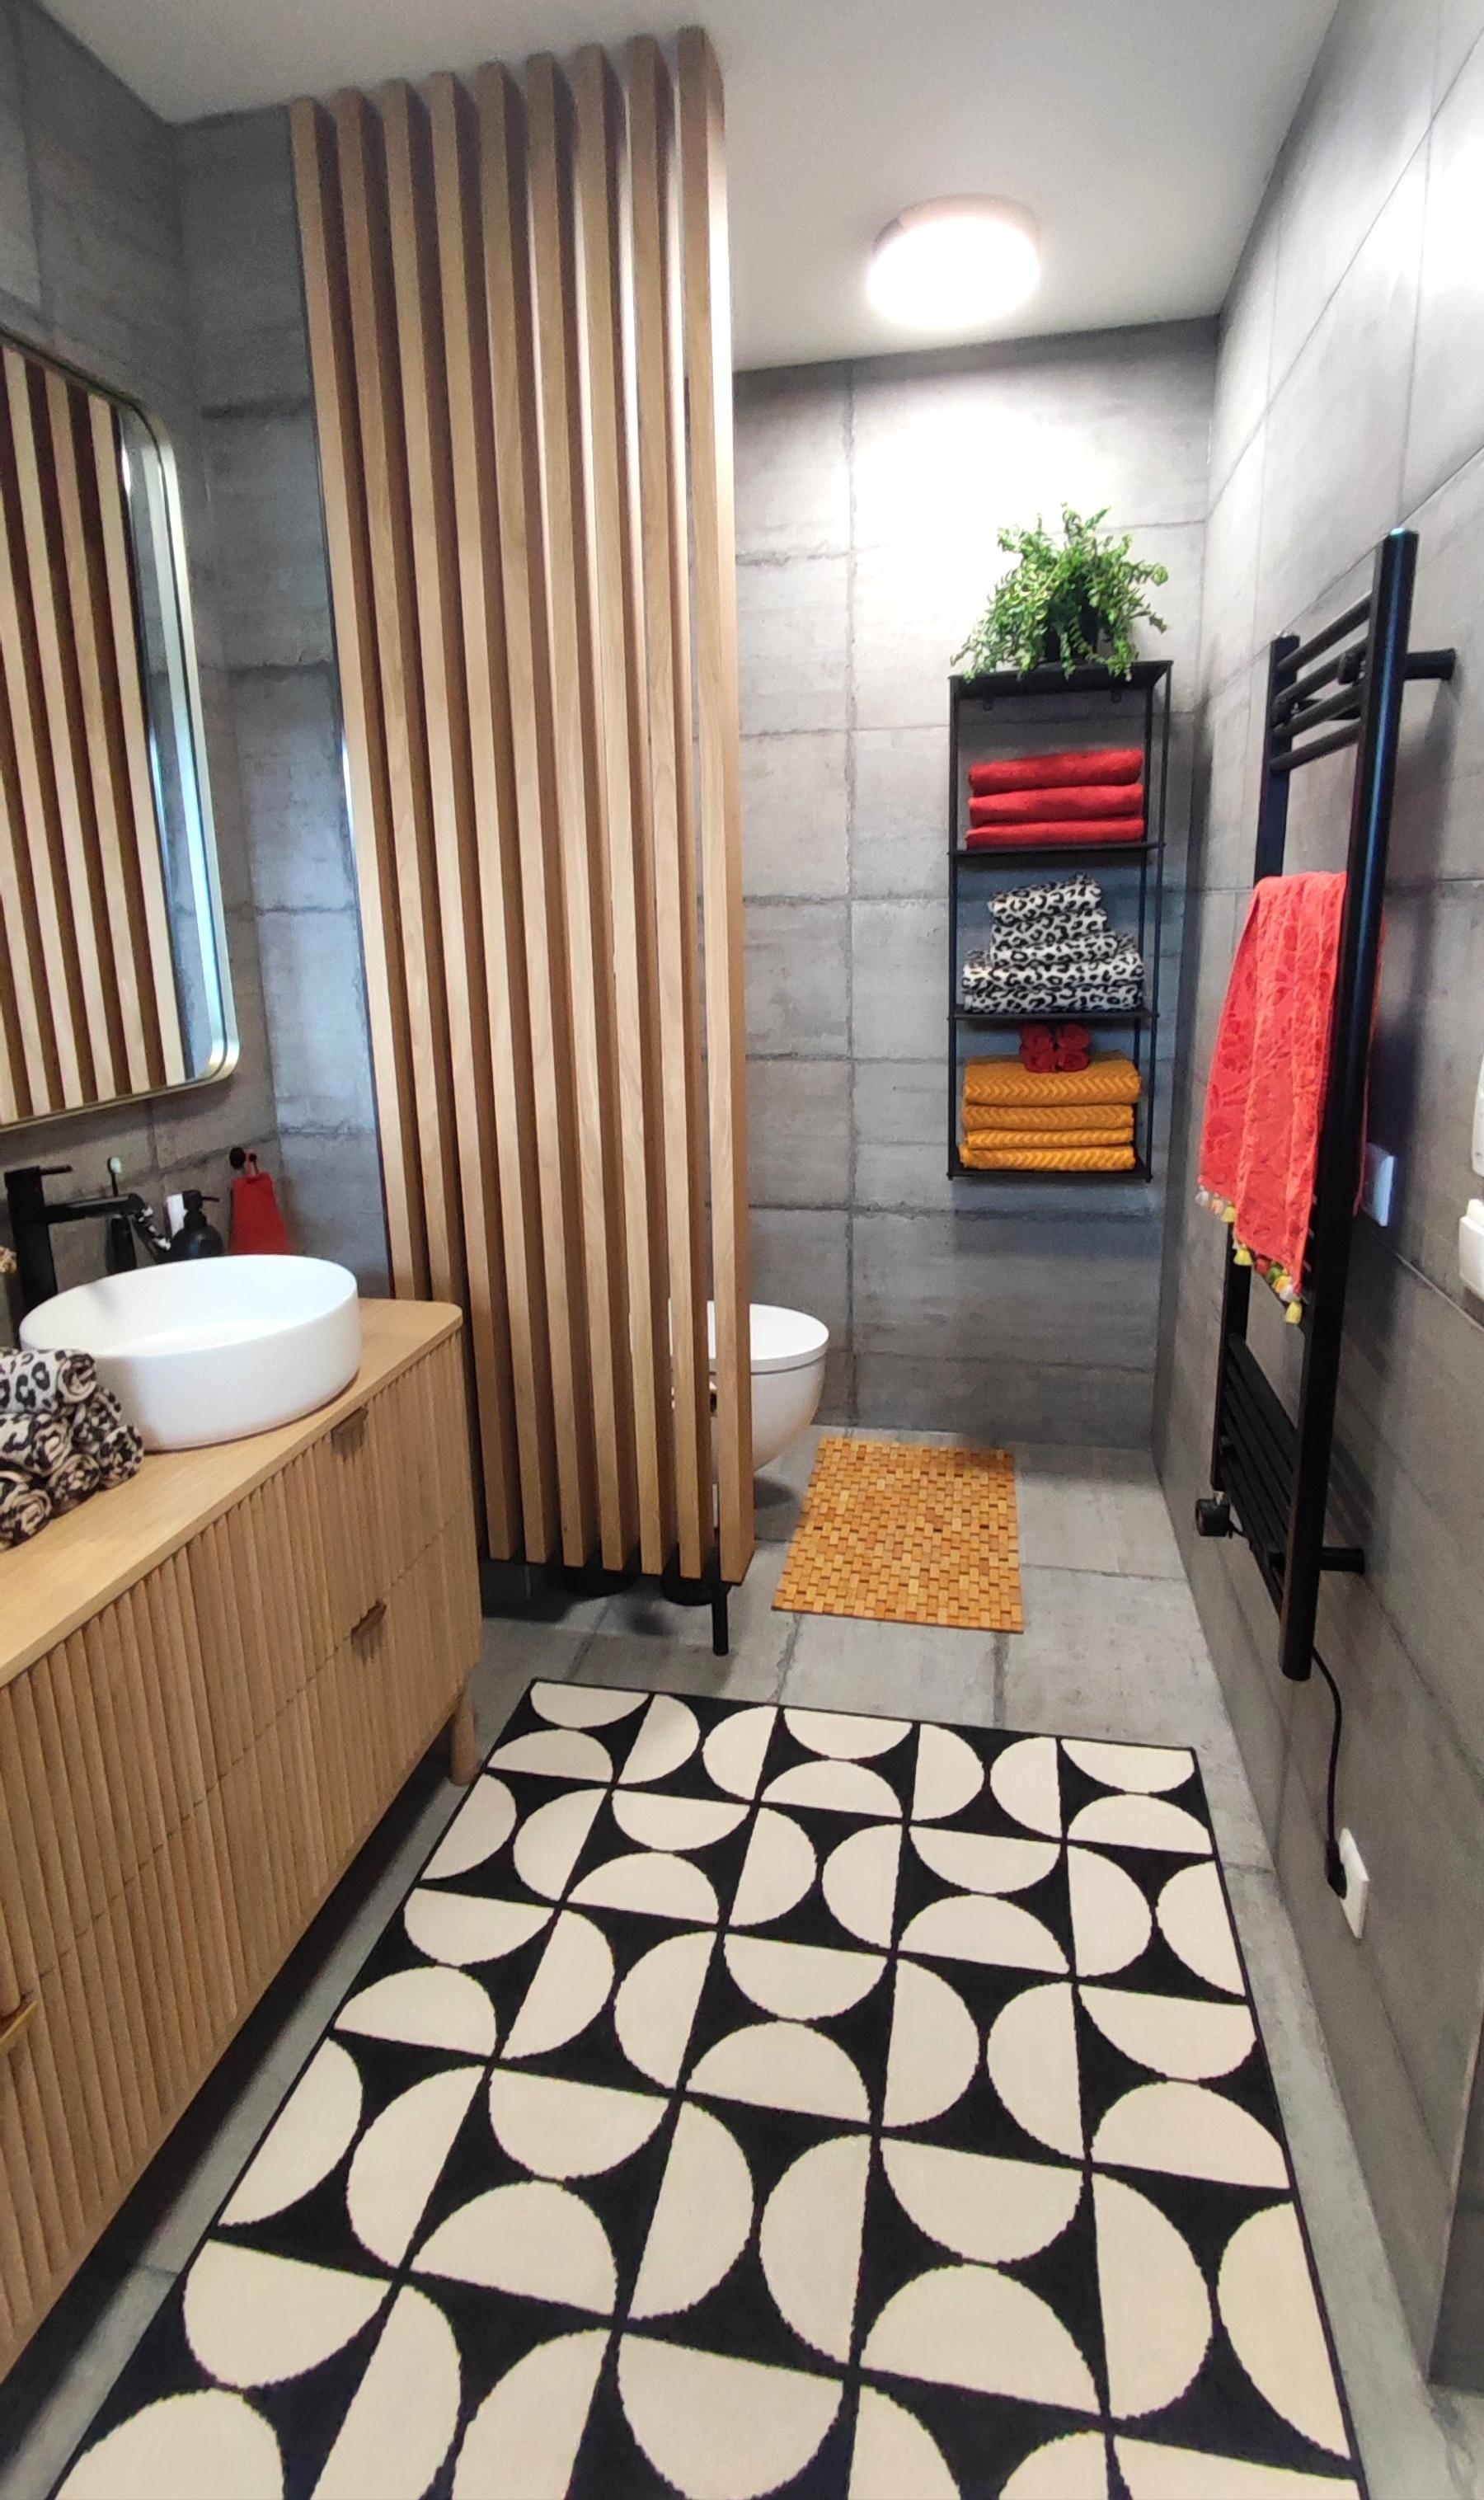 #bathroom #roomdesign #living #interior #interiordesign #home #couchliebt #oase #decor #decoration #styling #wood #panel